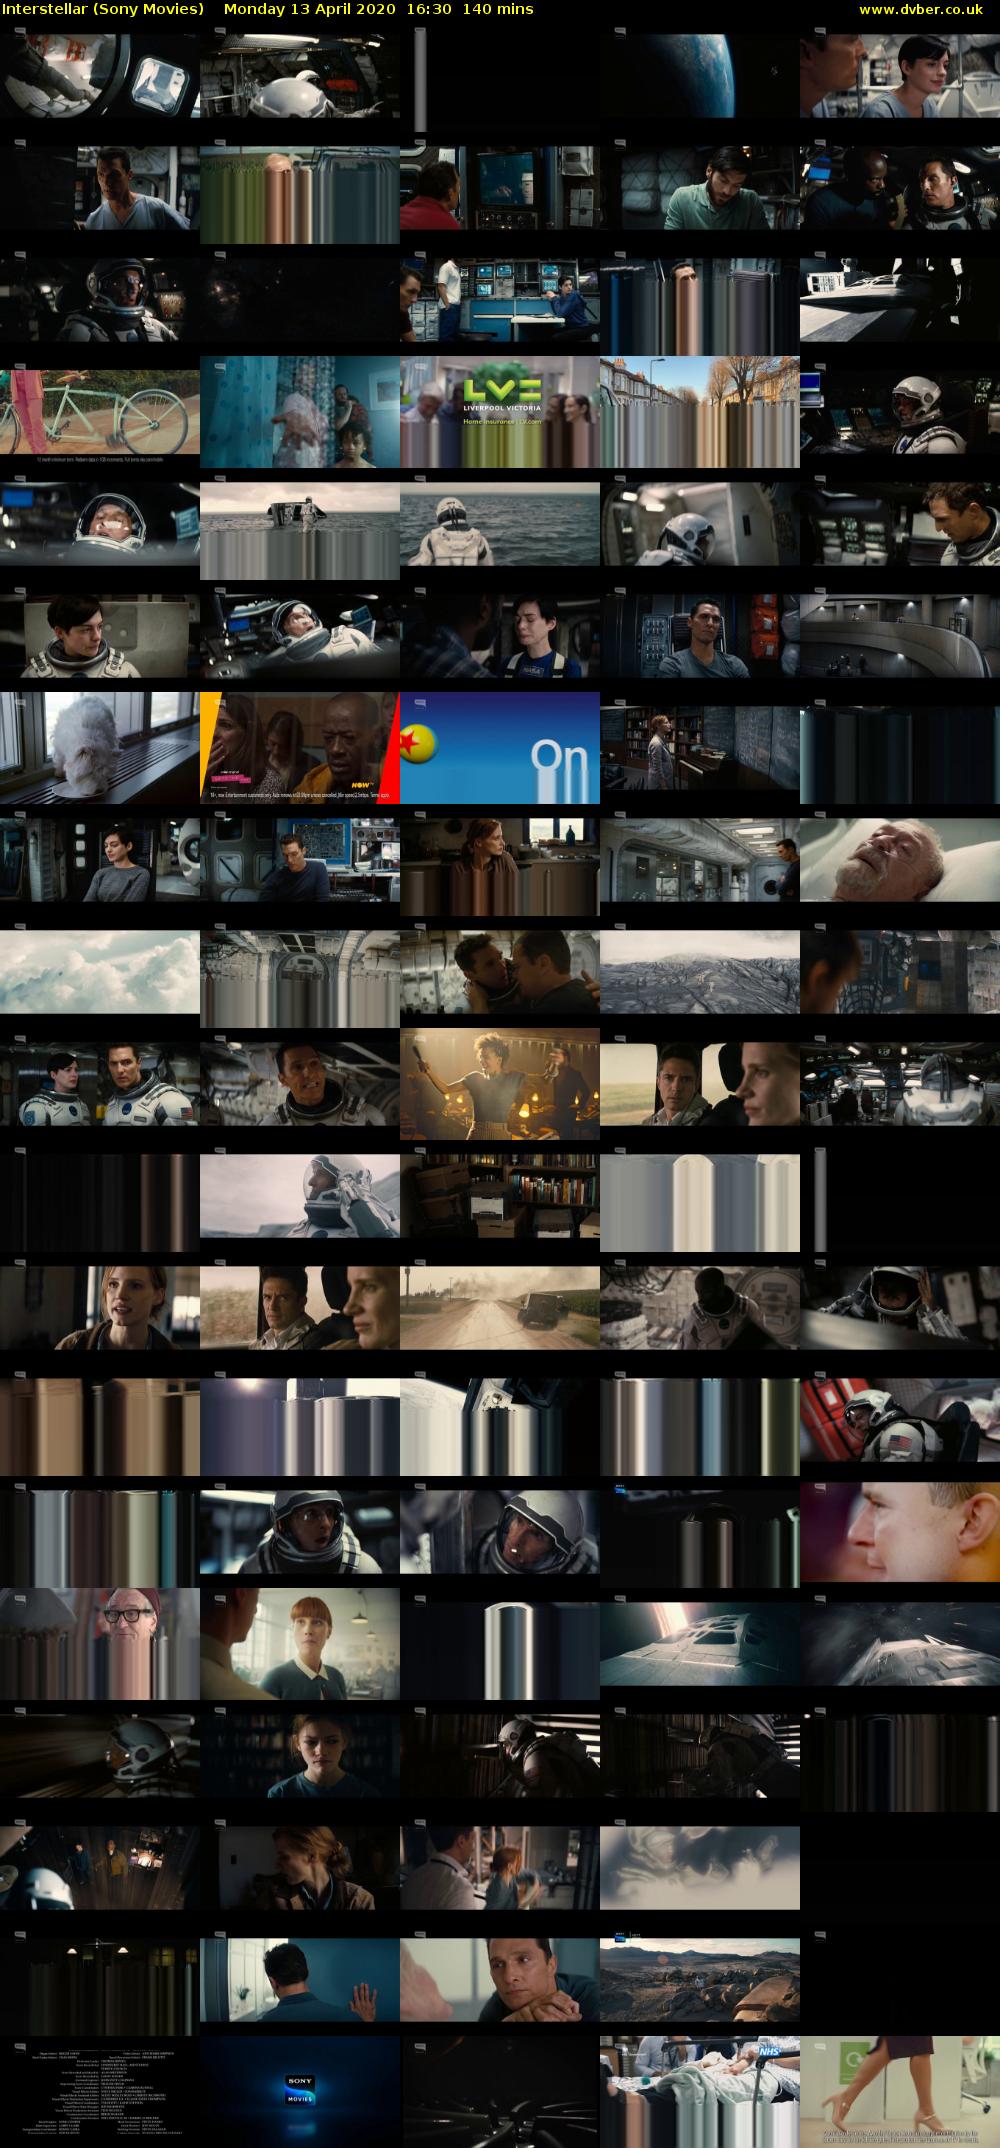 Interstellar (Sony Movies) Monday 13 April 2020 16:30 - 18:50